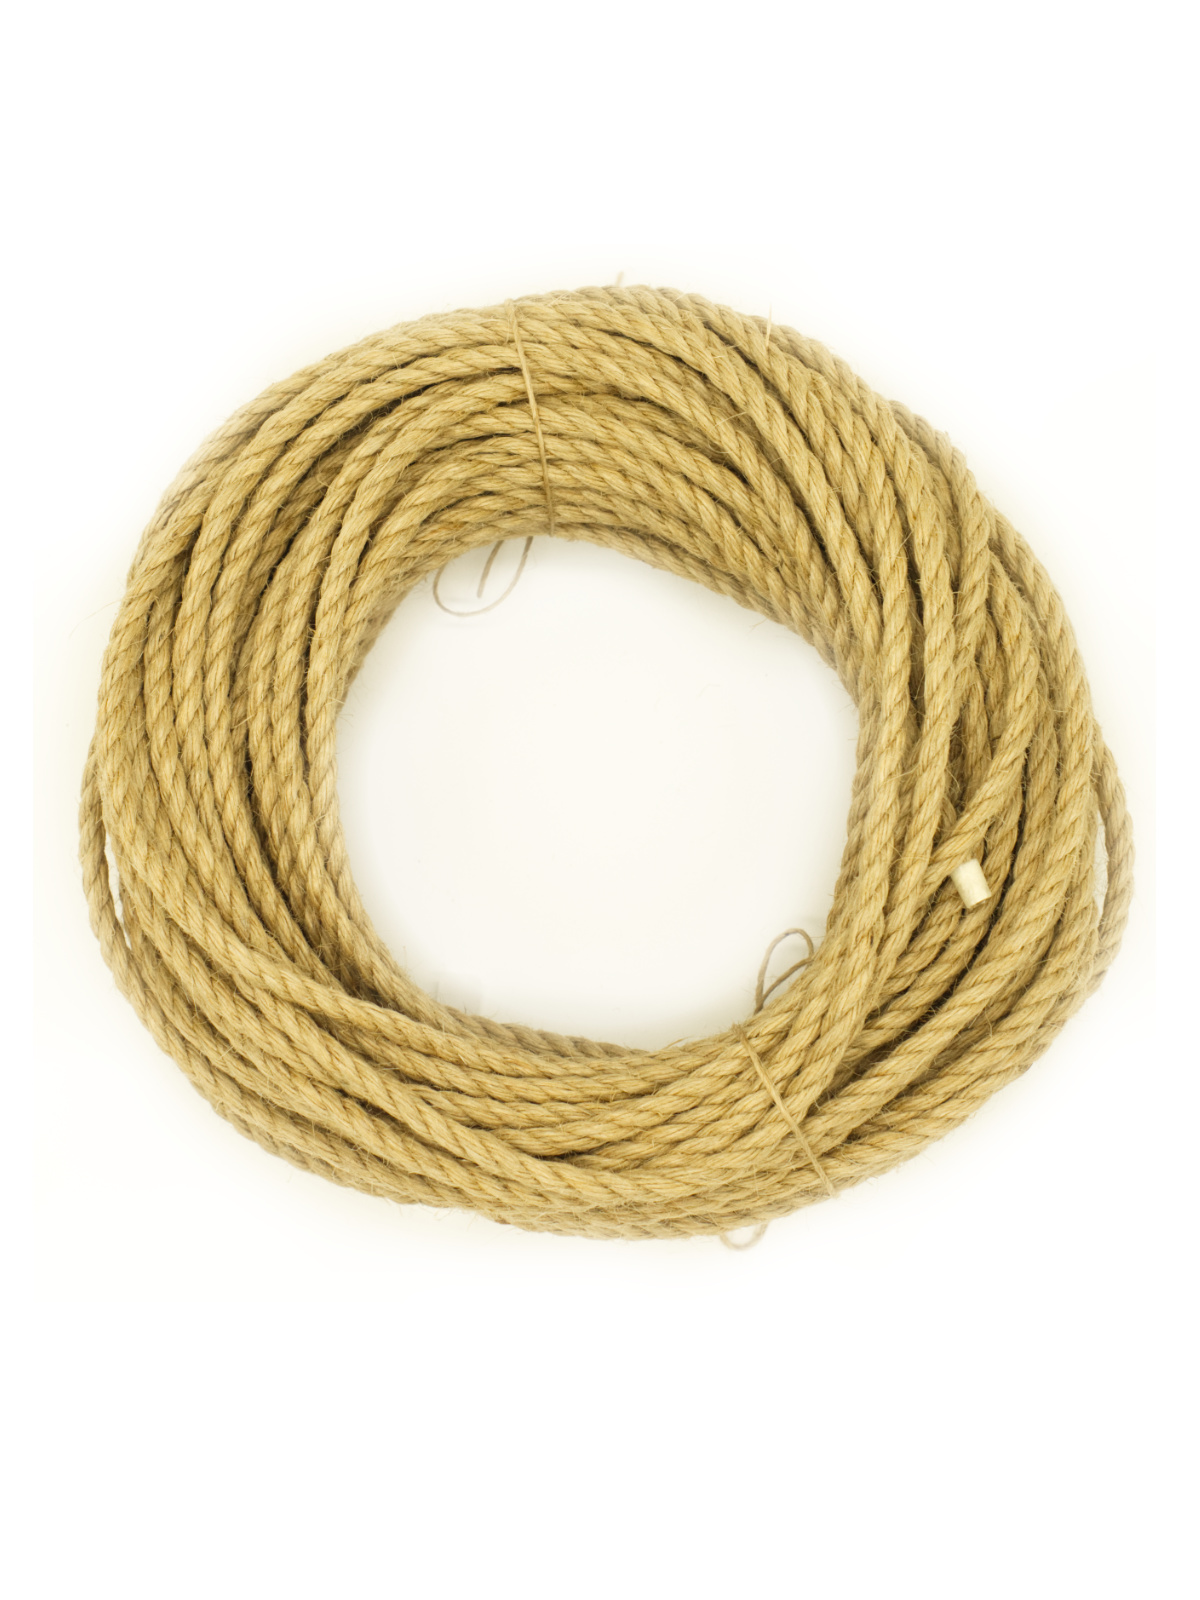 25m ∅ 5.5mm raw jute rope, AMATSUNAWA 30, JBO-free, for DIY processing